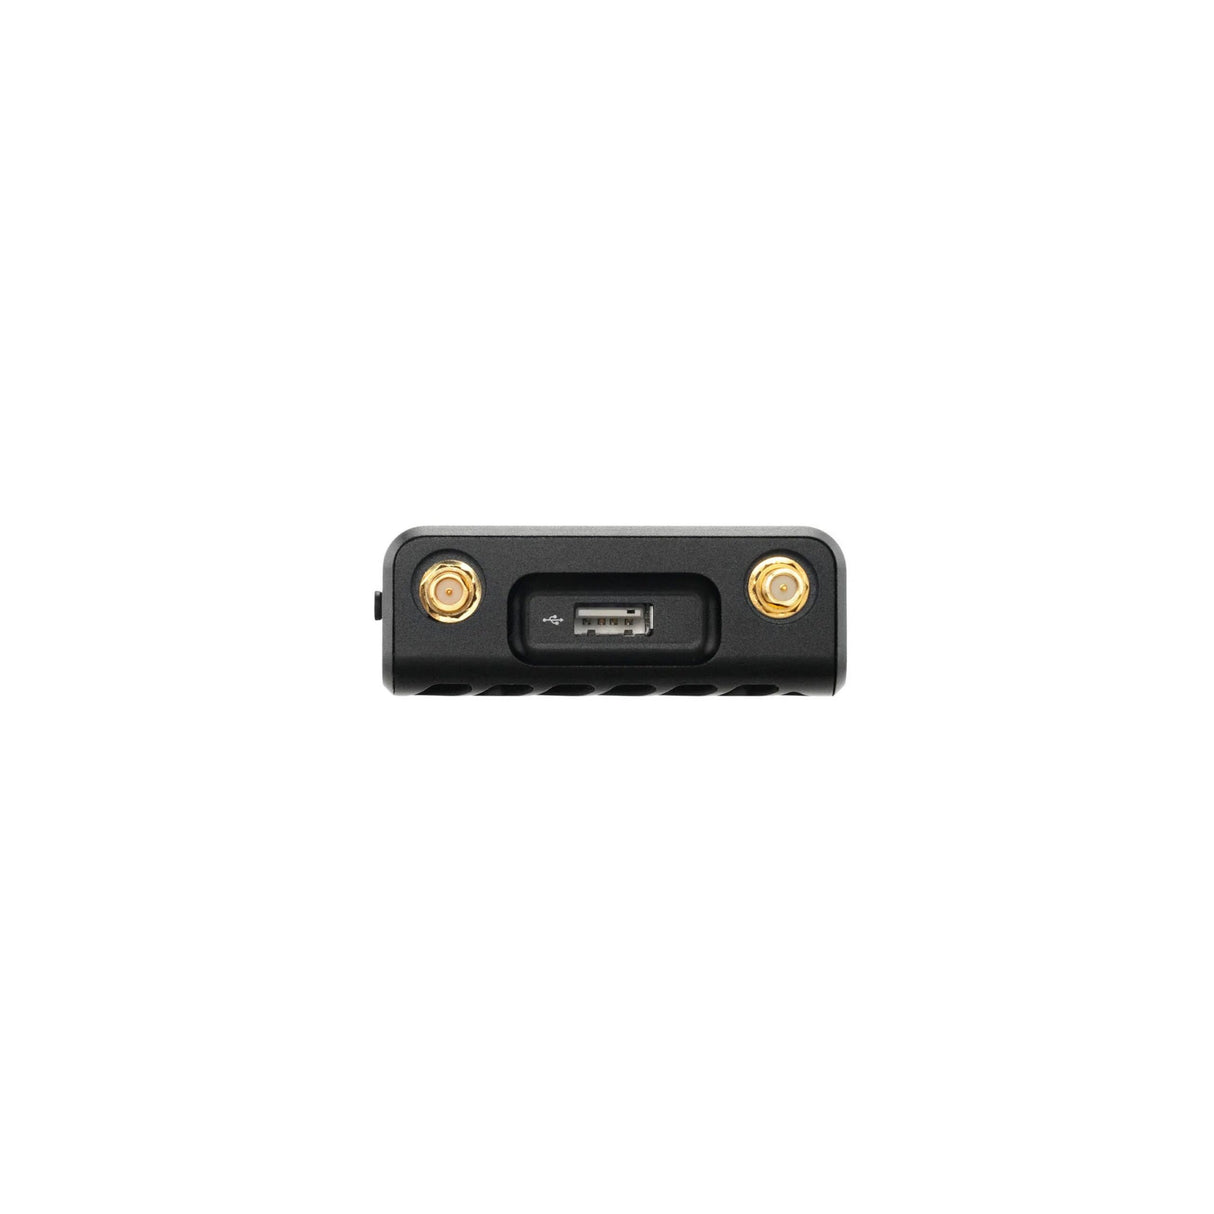 Teradek 10-0744 Serv Micro HDMI-Only Wireless Video Transmission System